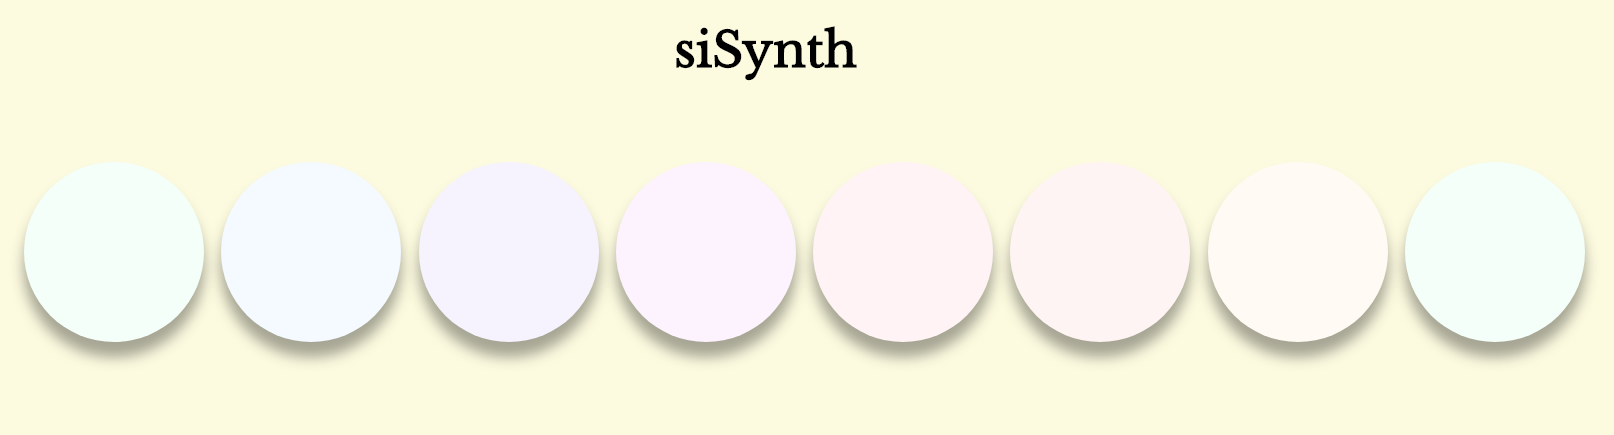 siSynth screenshot